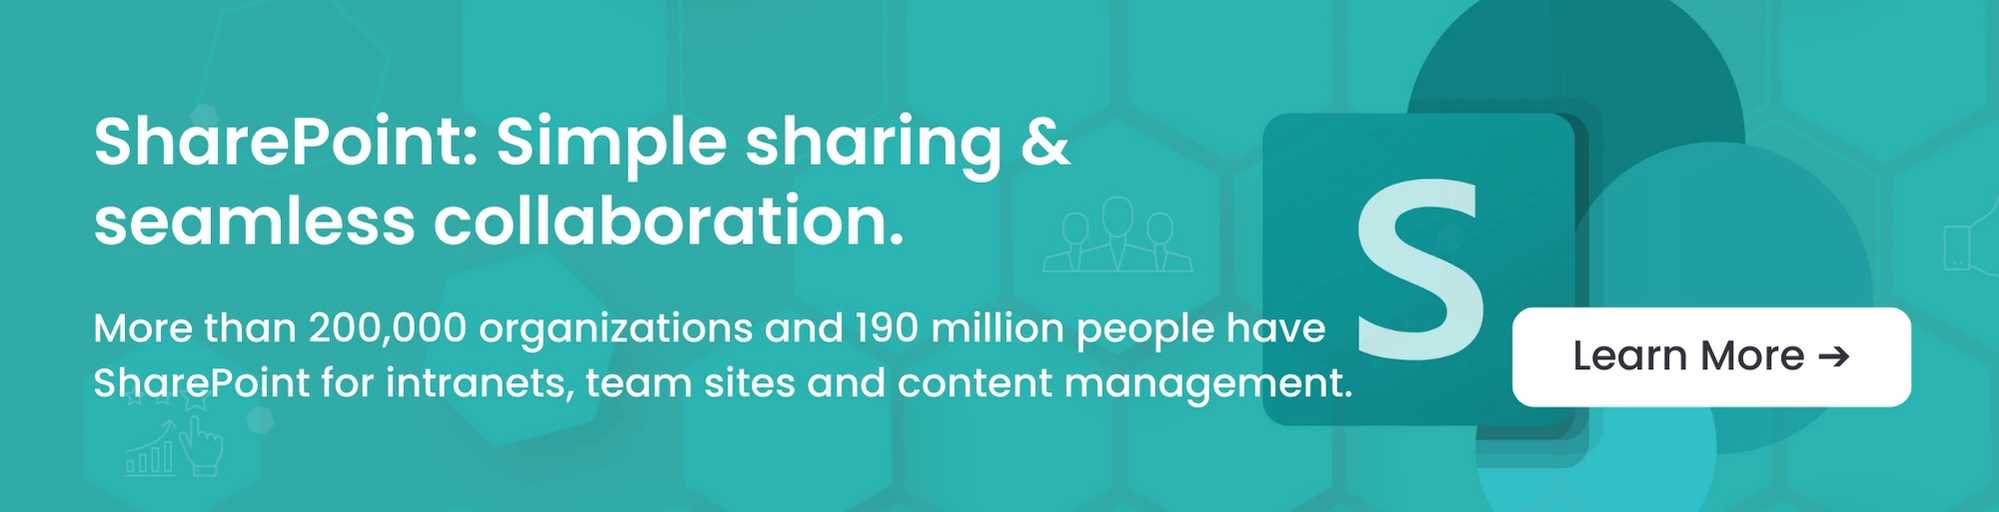 SharePoint Sharing & Collaboration